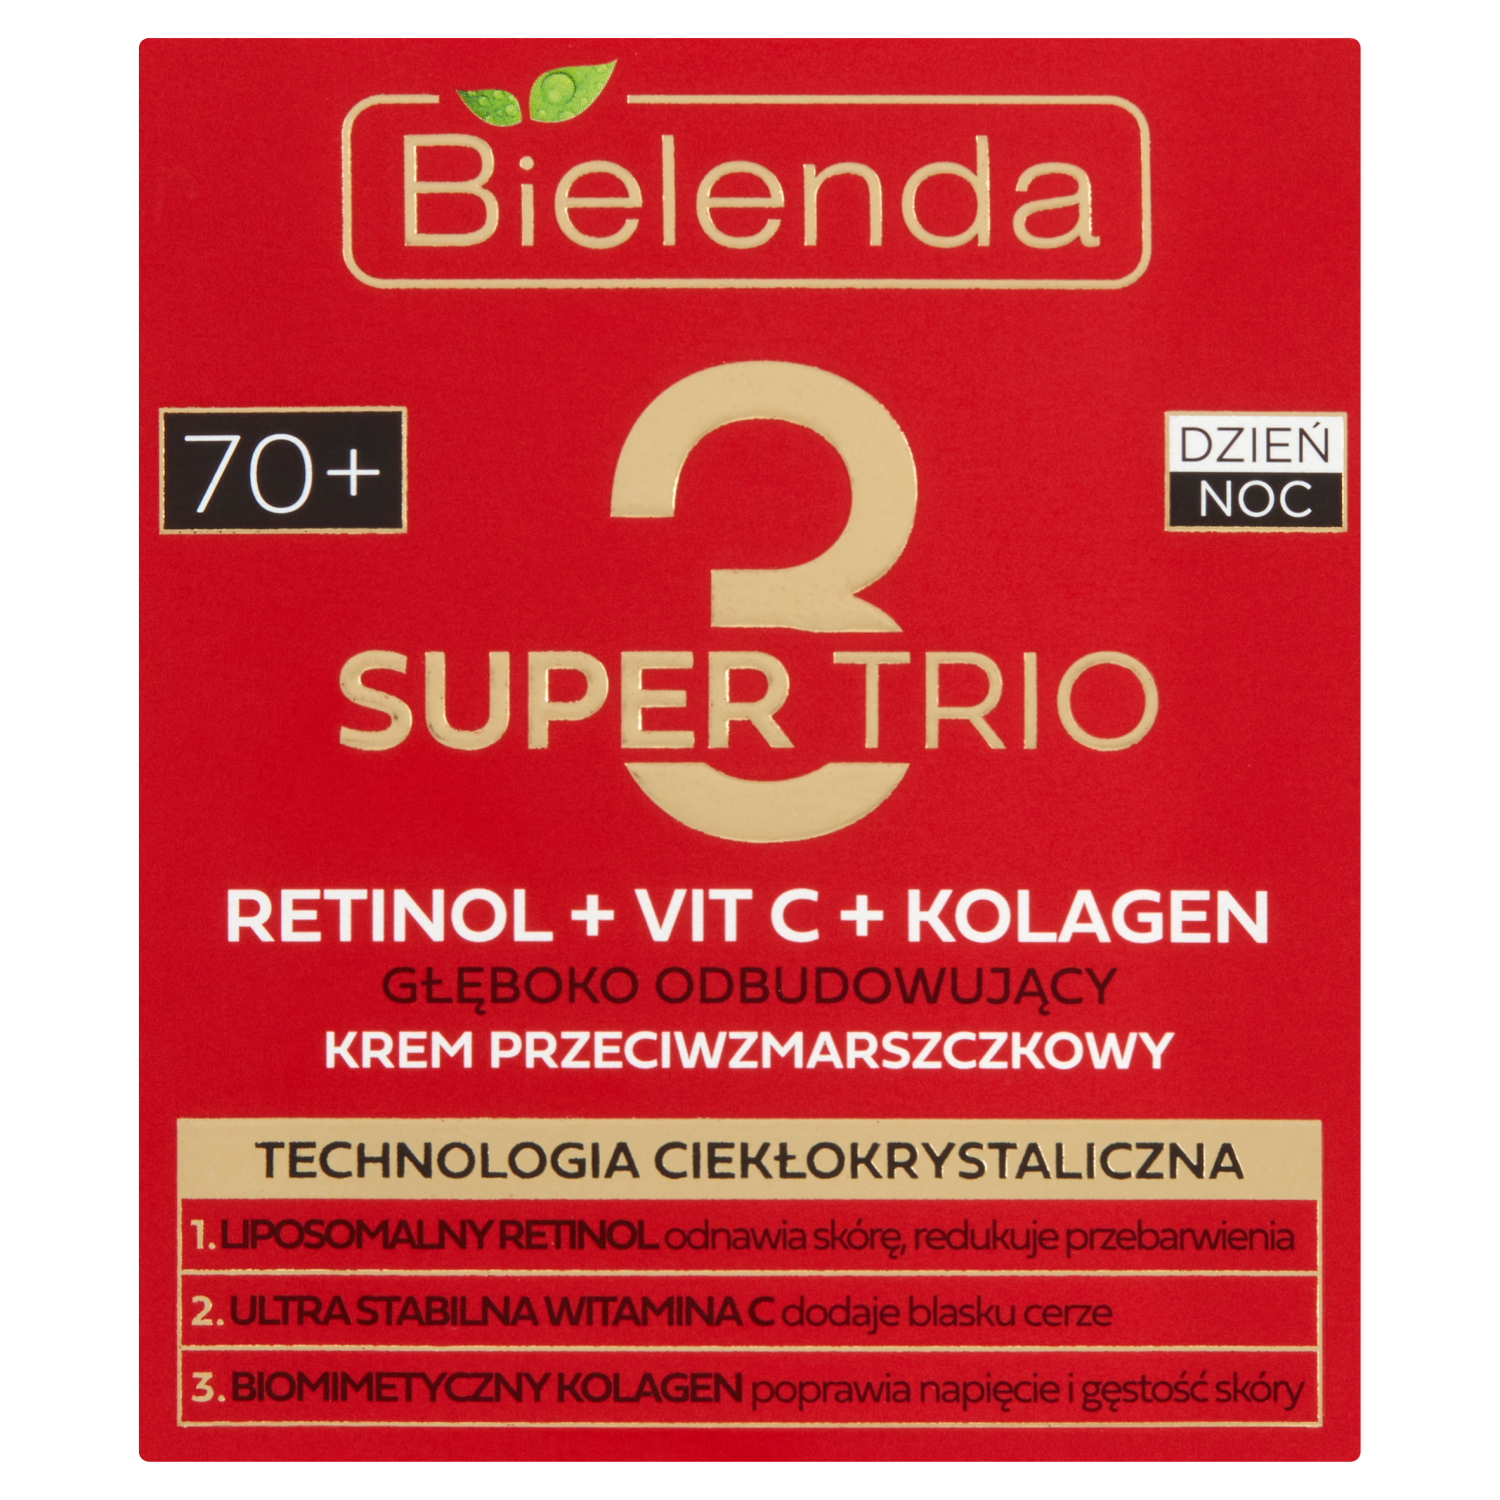 Bielenda Super Trio крем для лица против морщин 70+, 50 мл